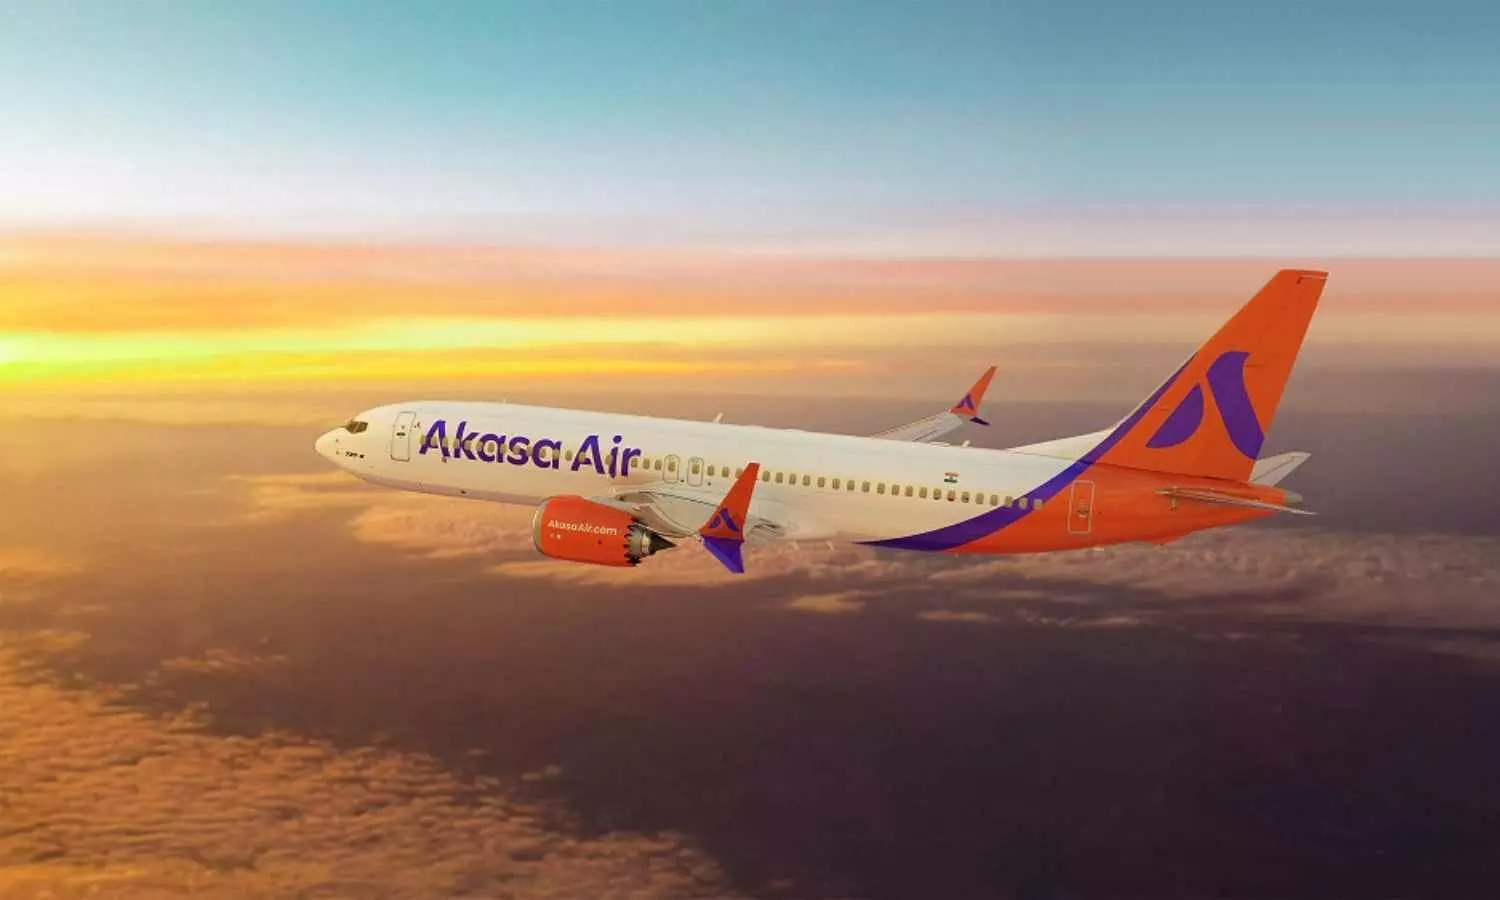 Akasa Air adds Abu Dhabi to growing network